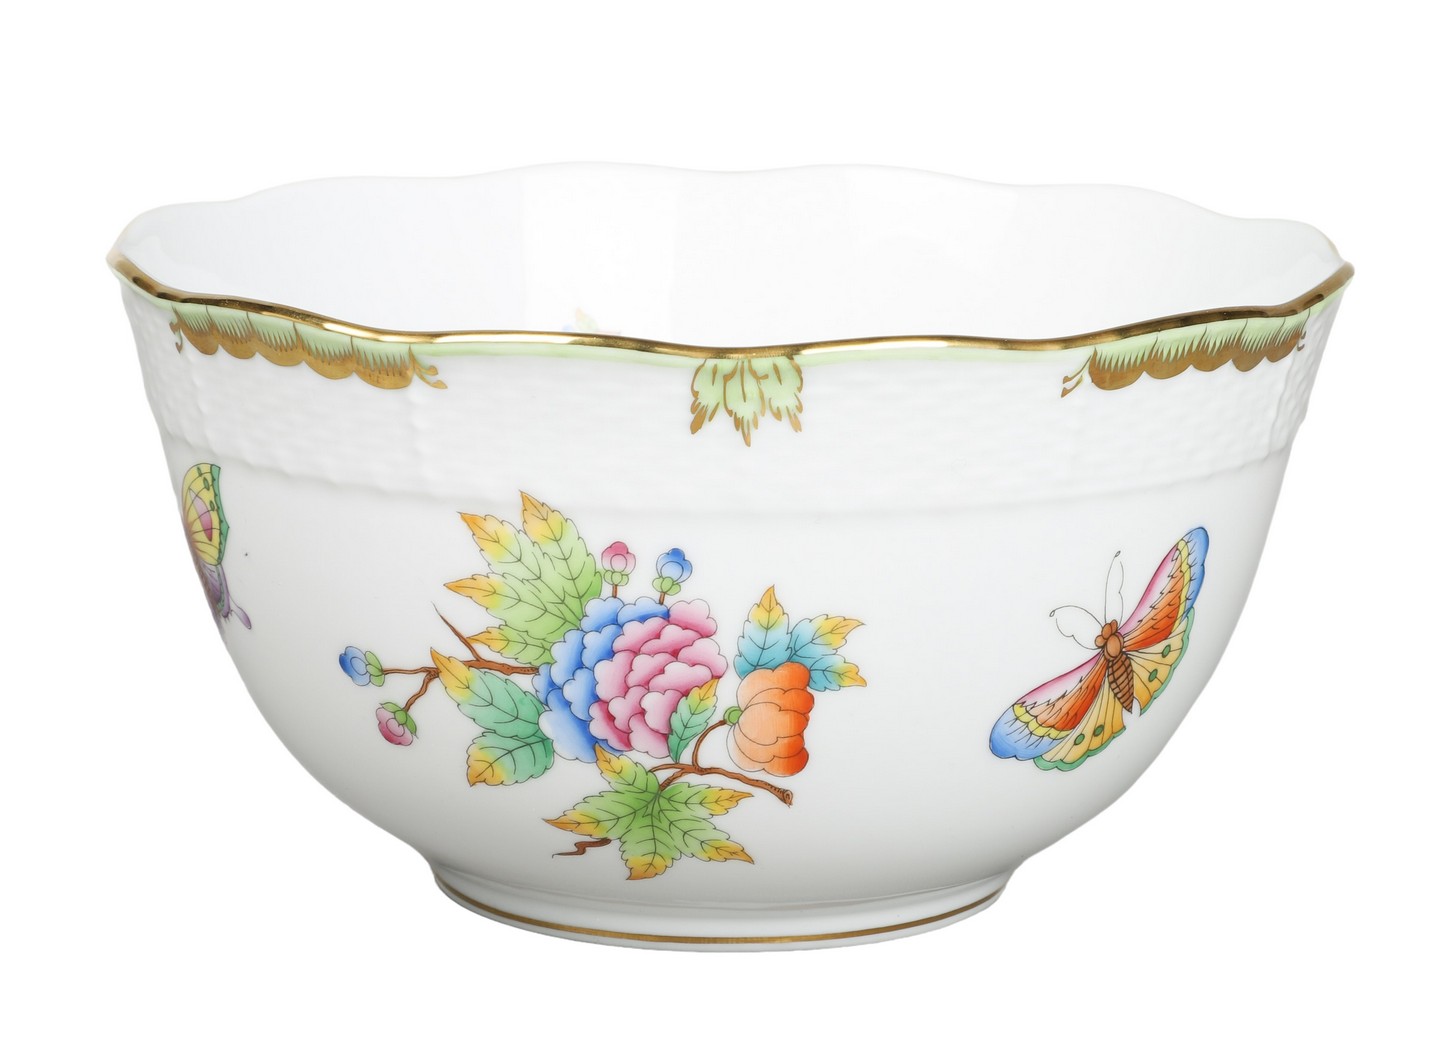 Herend porcelain serving bowl, Queen